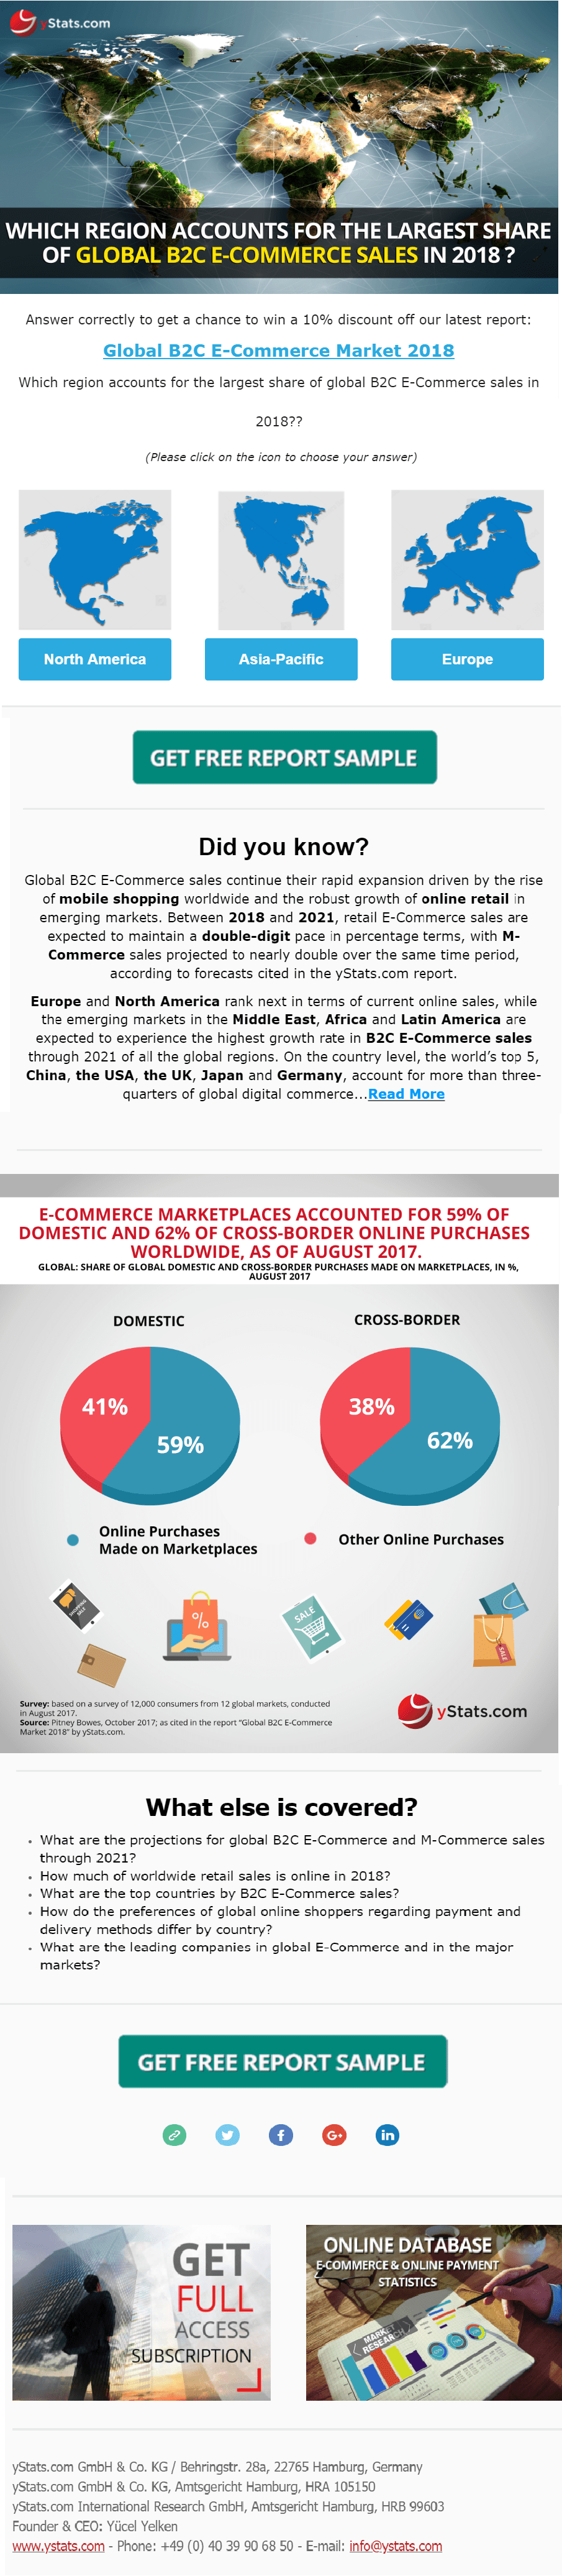 Global B2C E-Commerce Market